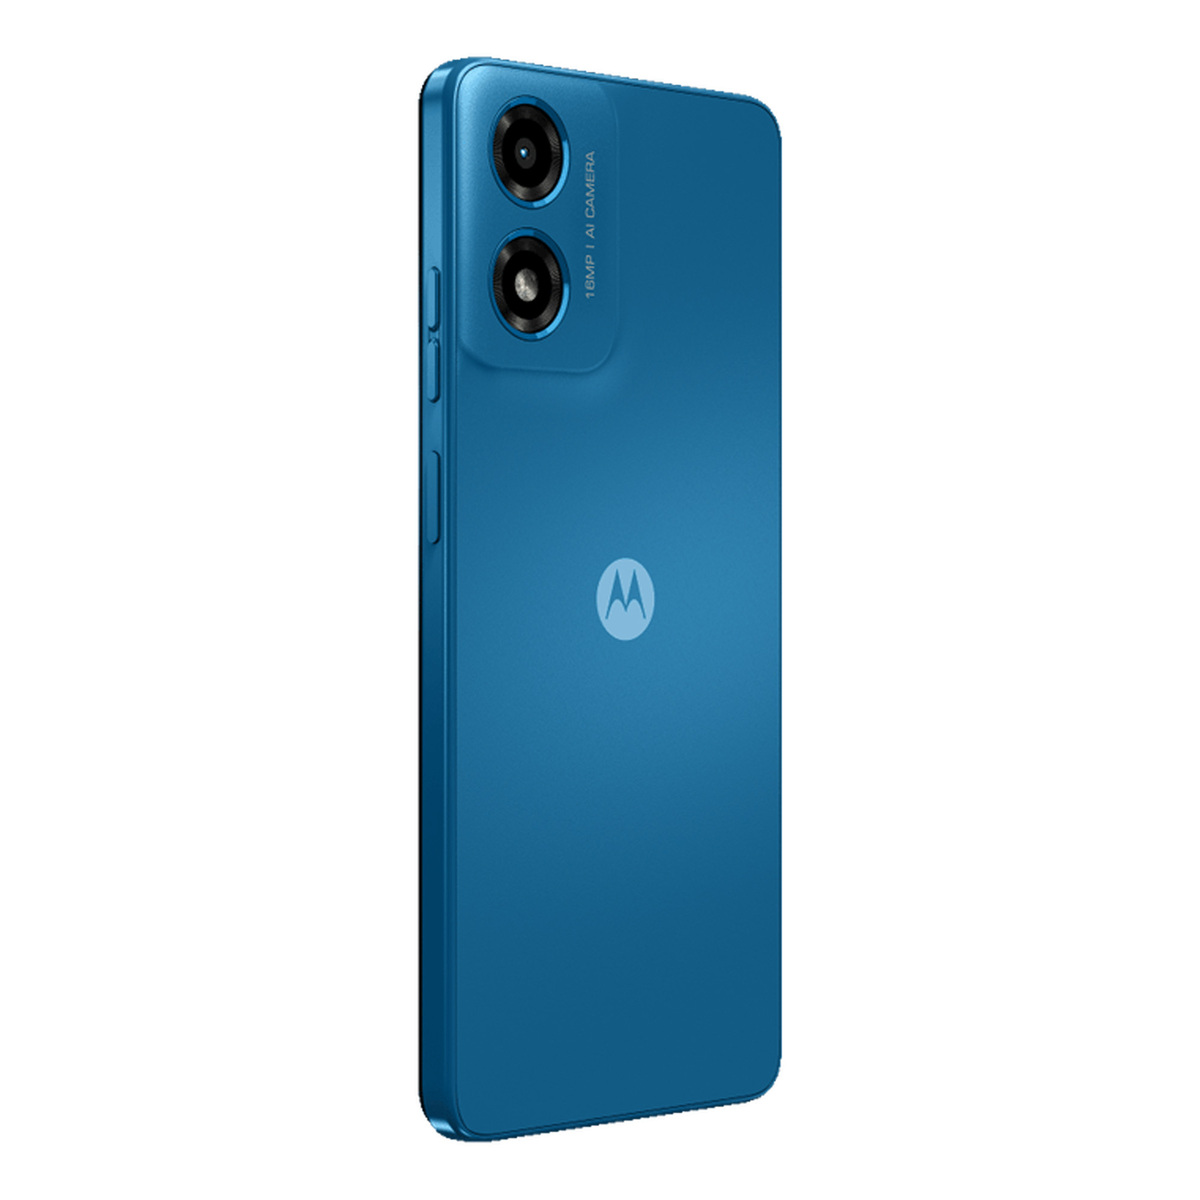 Motorola Moto G04 4G Smartphone, 4 GB RAM, 64 GB Storage, Satin Blue